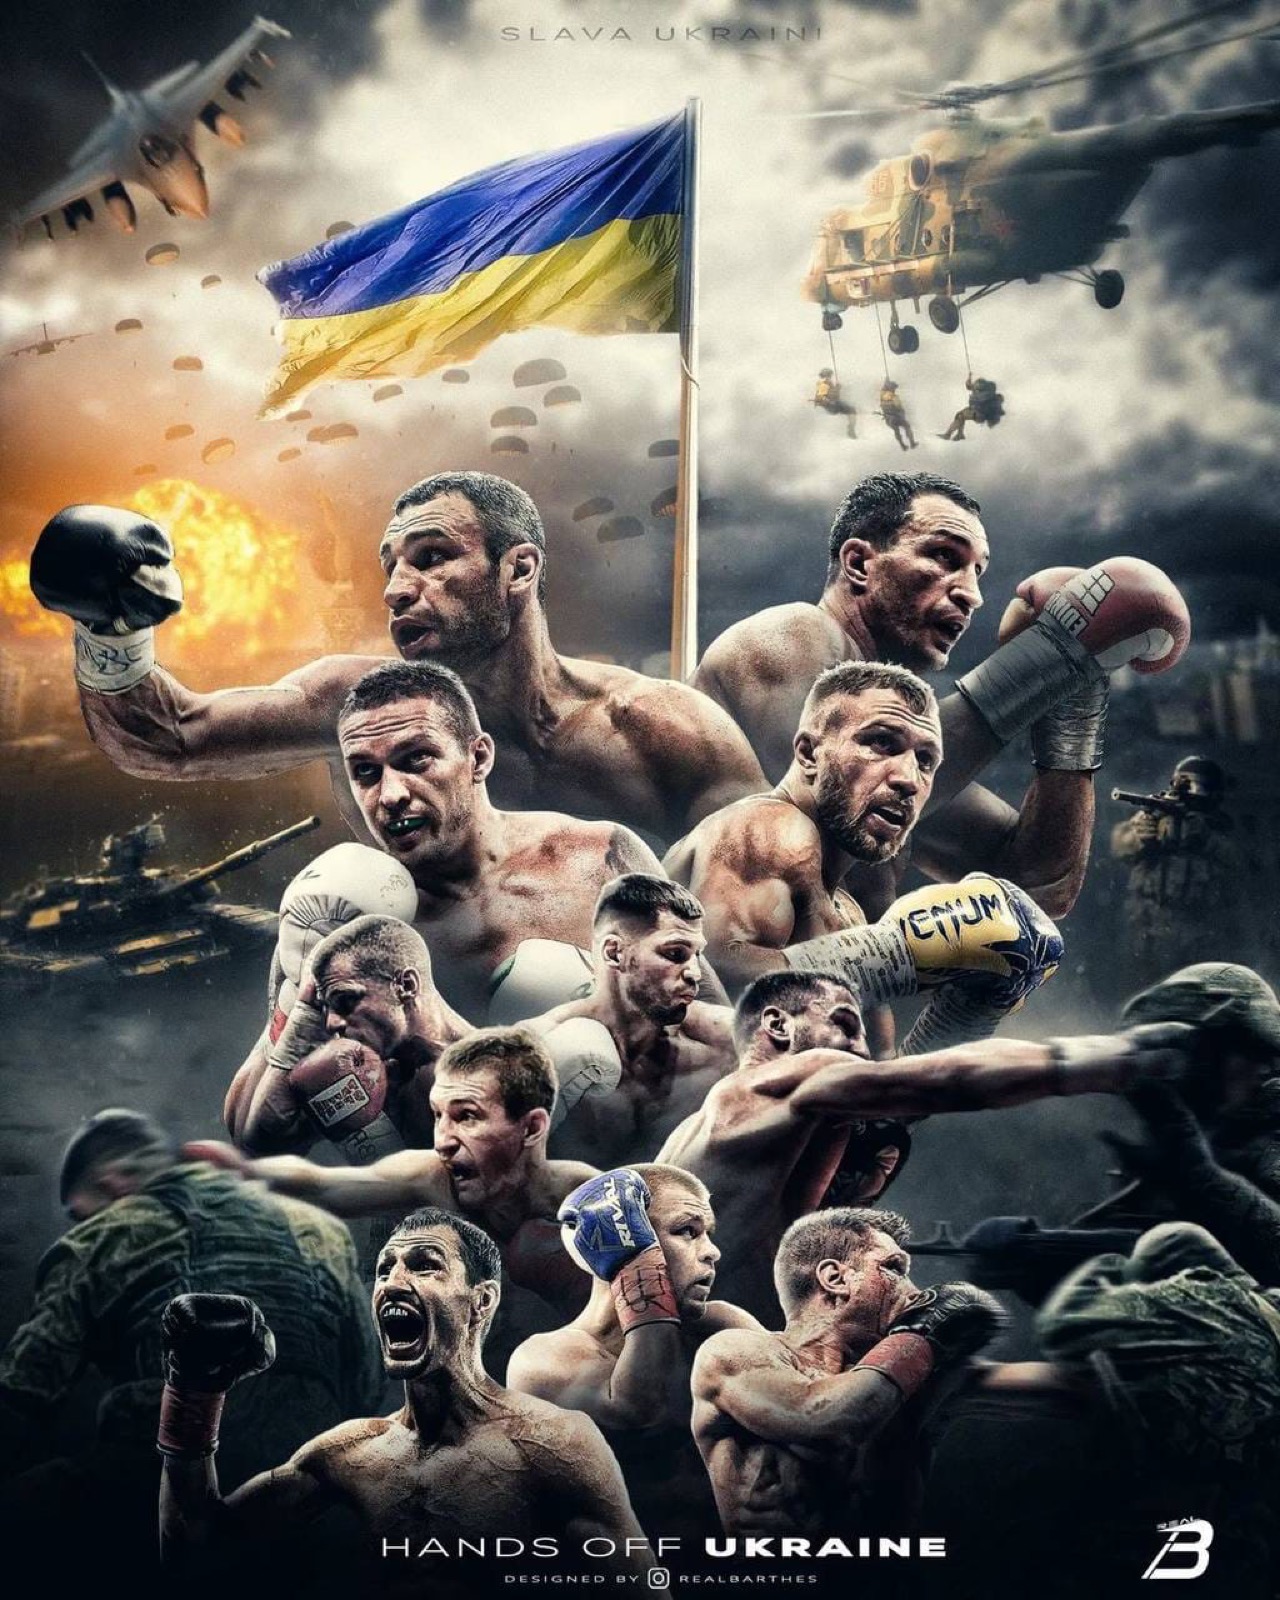 Wladimir Klitschko boxing image / photo